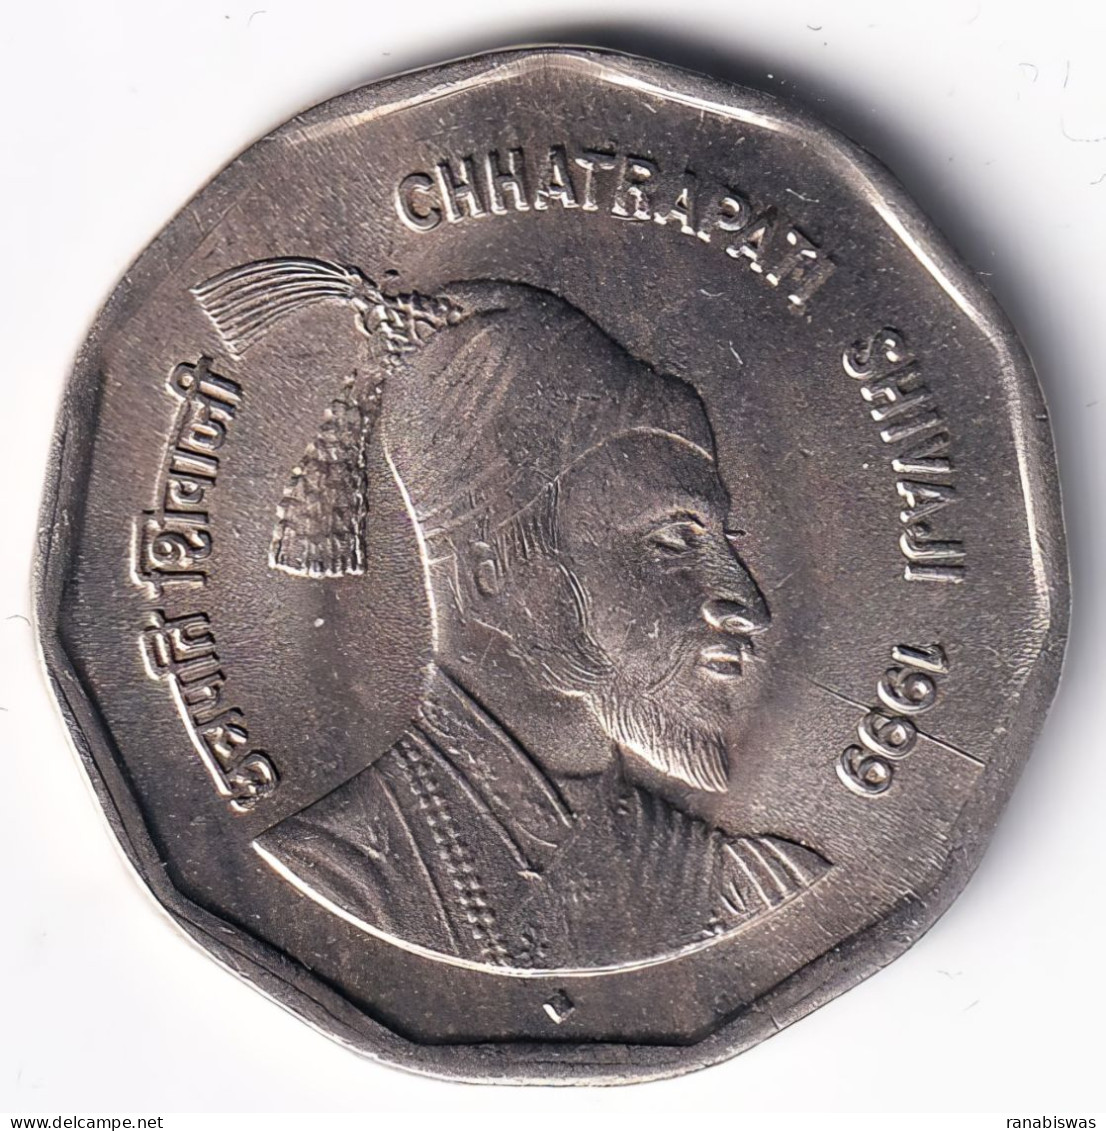 INDIA COIN LOT 73, 2 RUPEES 1999, CHHATRAPATI SHIVAJI, BOMBAY MINT, AUNC, SCARE - India